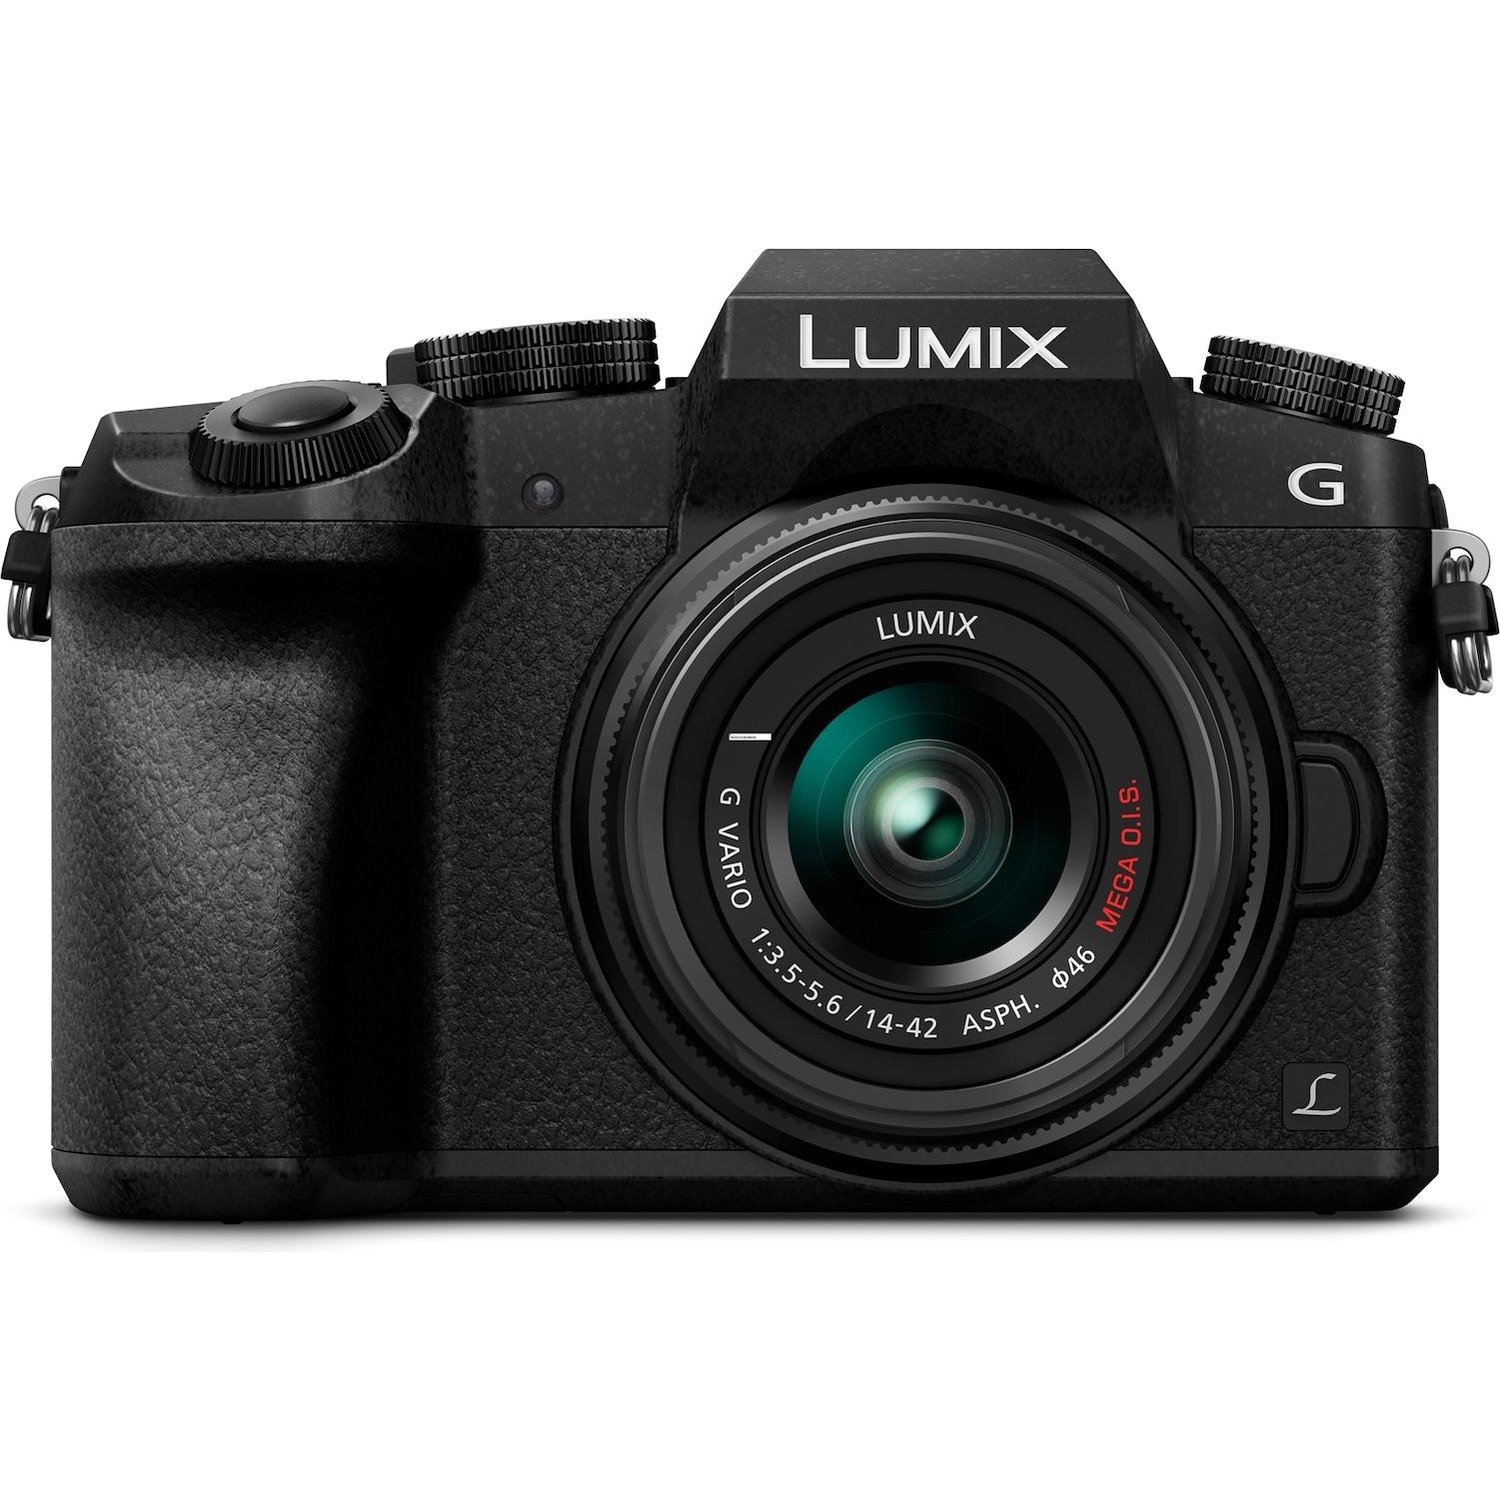 Image of Fotocamera mirrorless Panasonic G7 + ottica Lumix 14-42